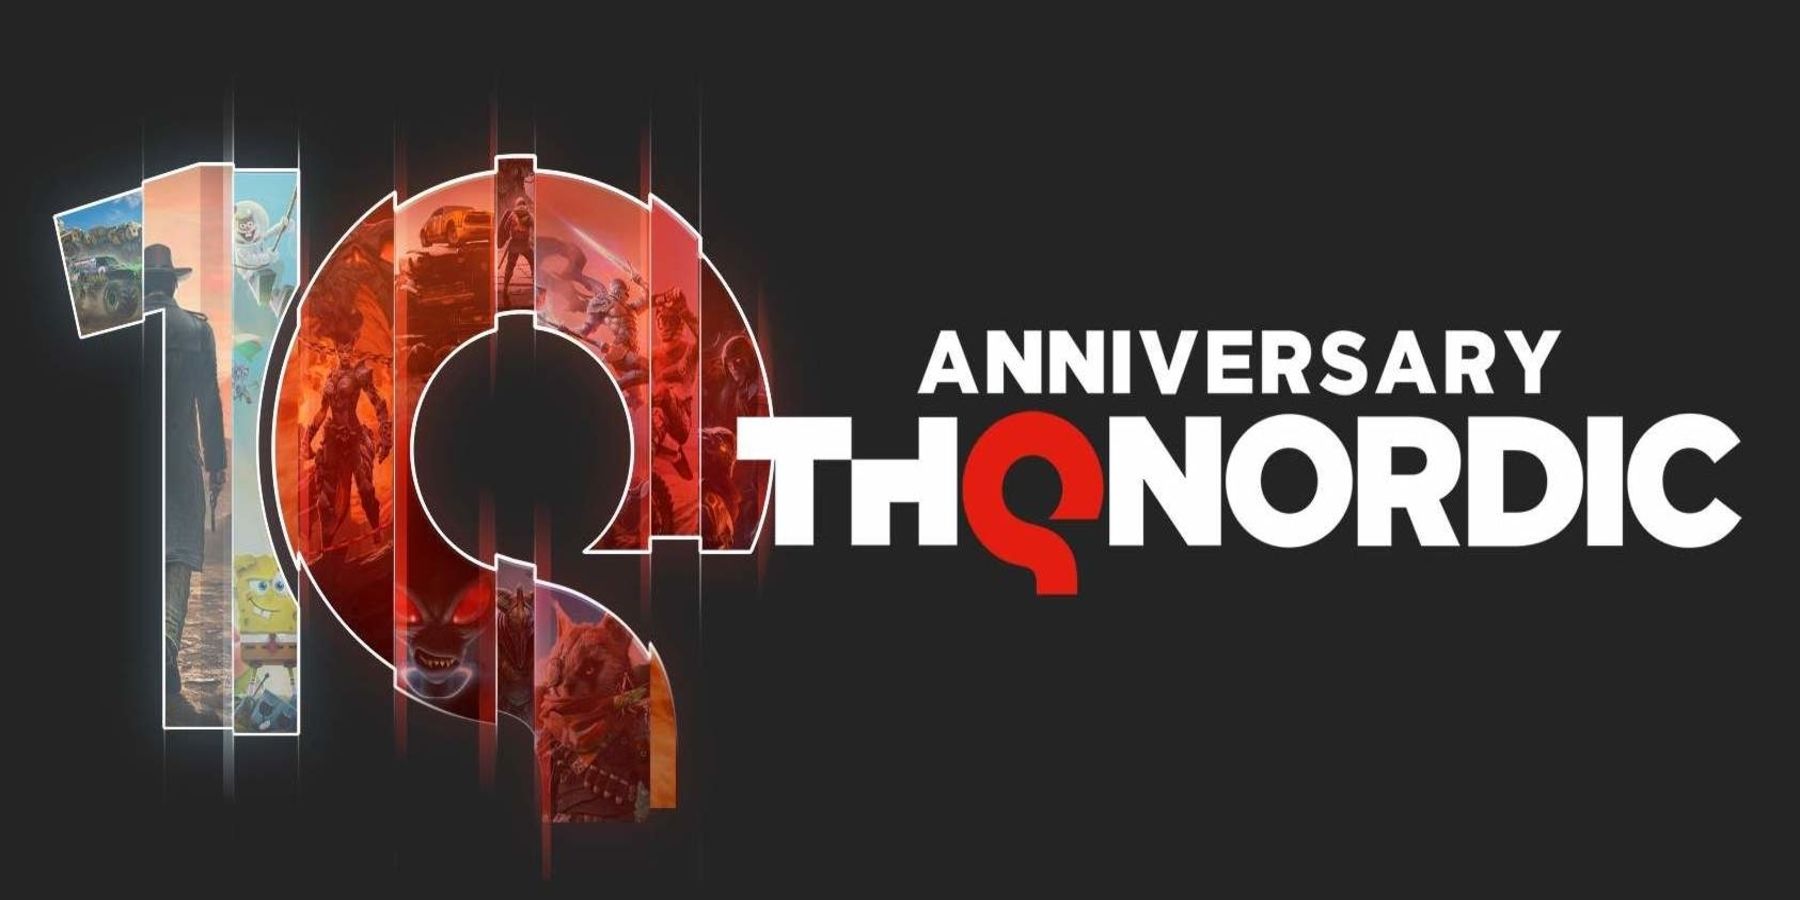 thq nordic celebrating anniversary with major xbox sale